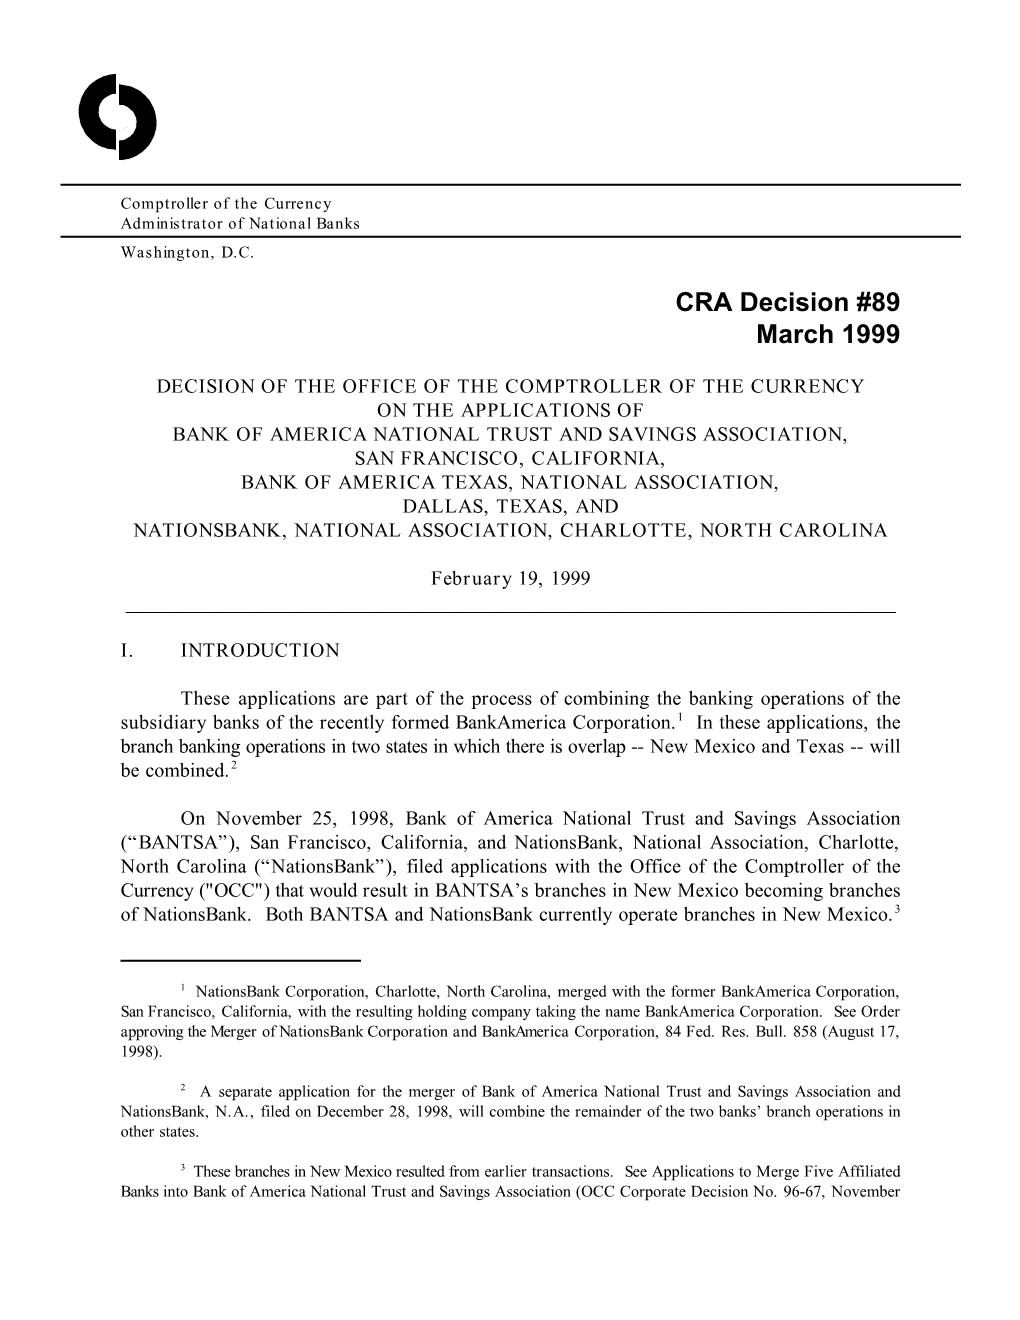 CRA Decision #89 March 1999